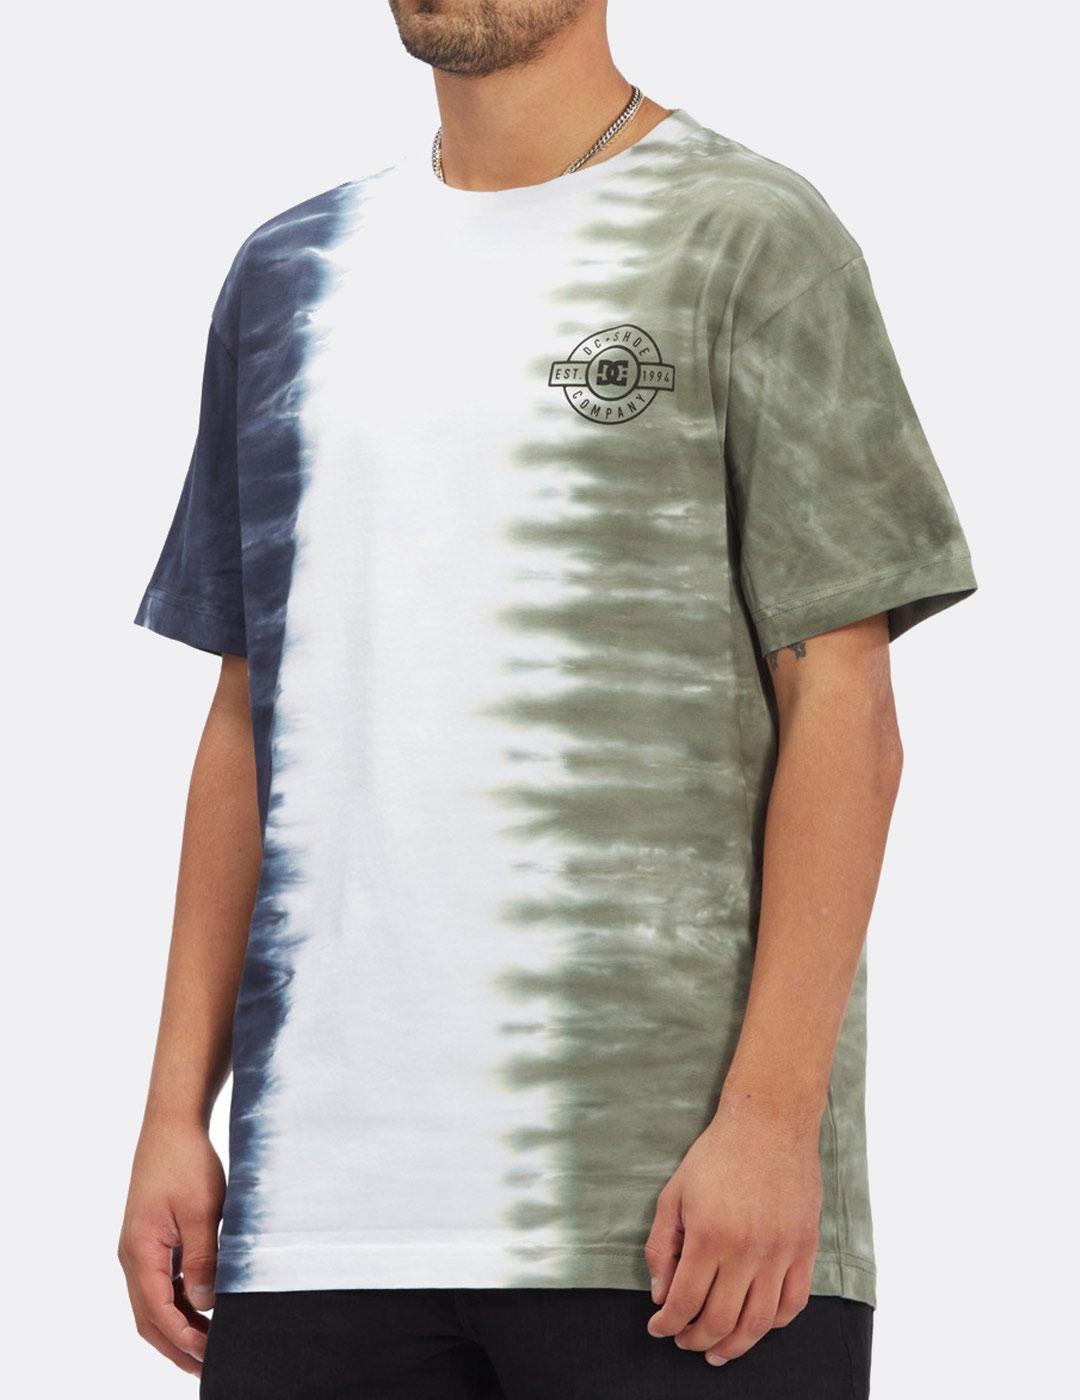 Camiseta DCSHOES HALF AND HALF M KTTP - Navy Half Tie Dye